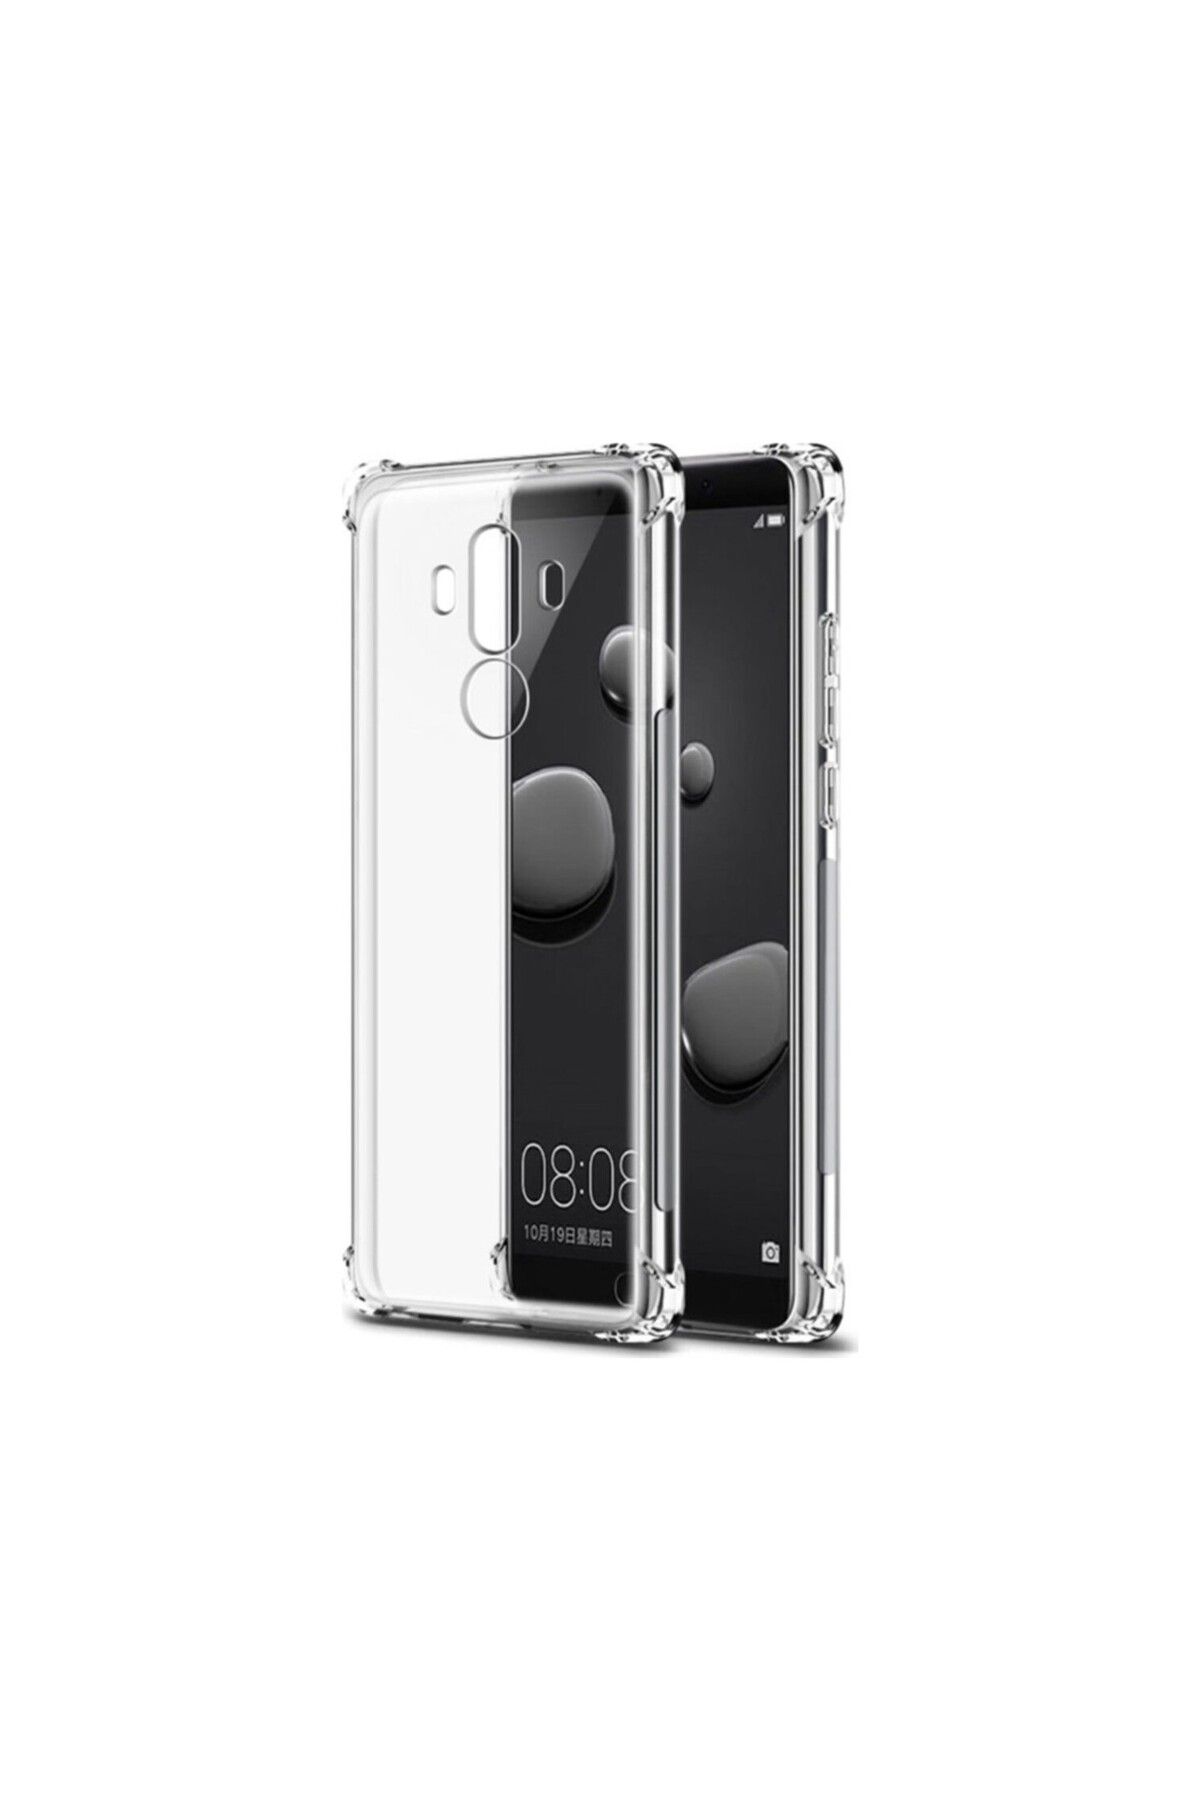 Fibaks Huawei Mate 10 Pro Kılıf Crystal Sert Pc Antishock Darbe Emici Kenar Şeffaf Silikon Kapak